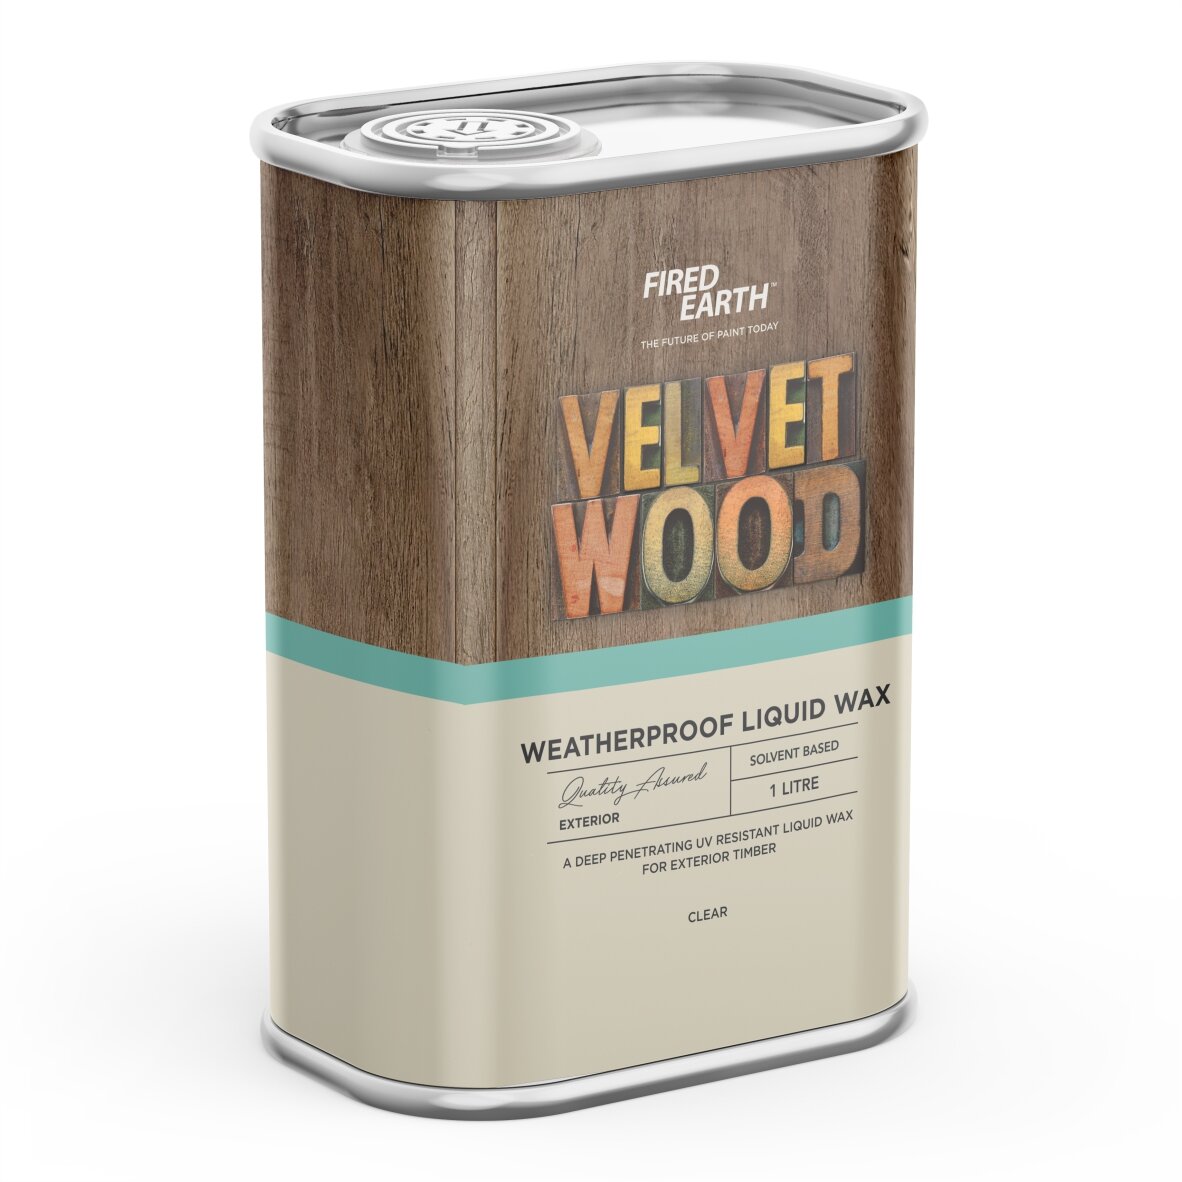 FE Wood Velvet Weatherproofing Oil.jpg